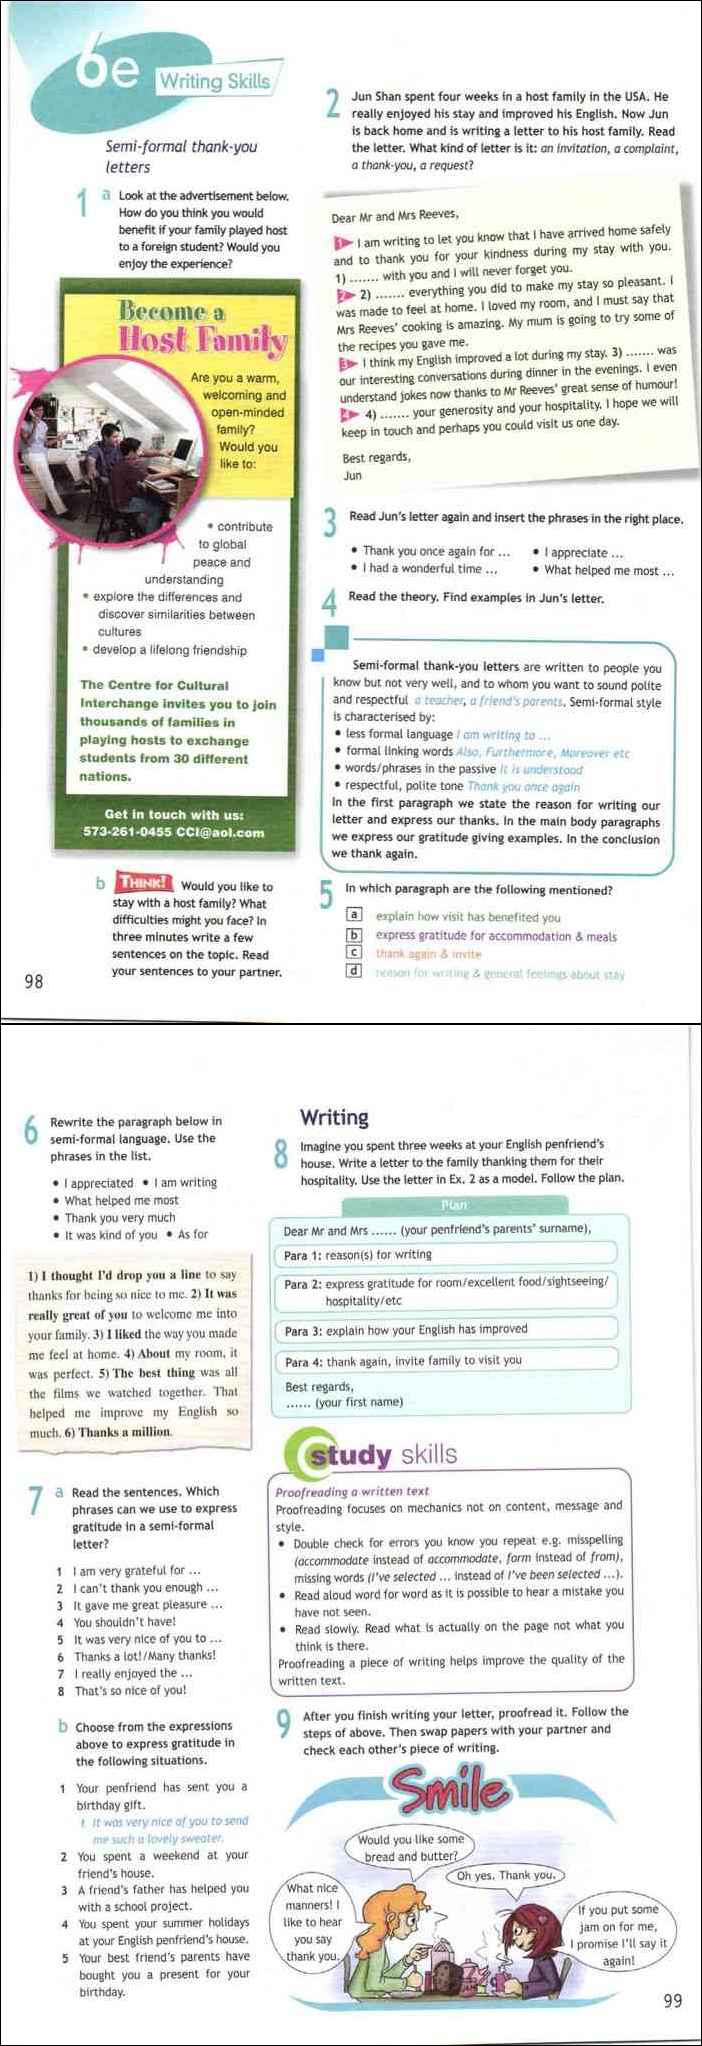 Английский язык 8 класс учебник стр 114